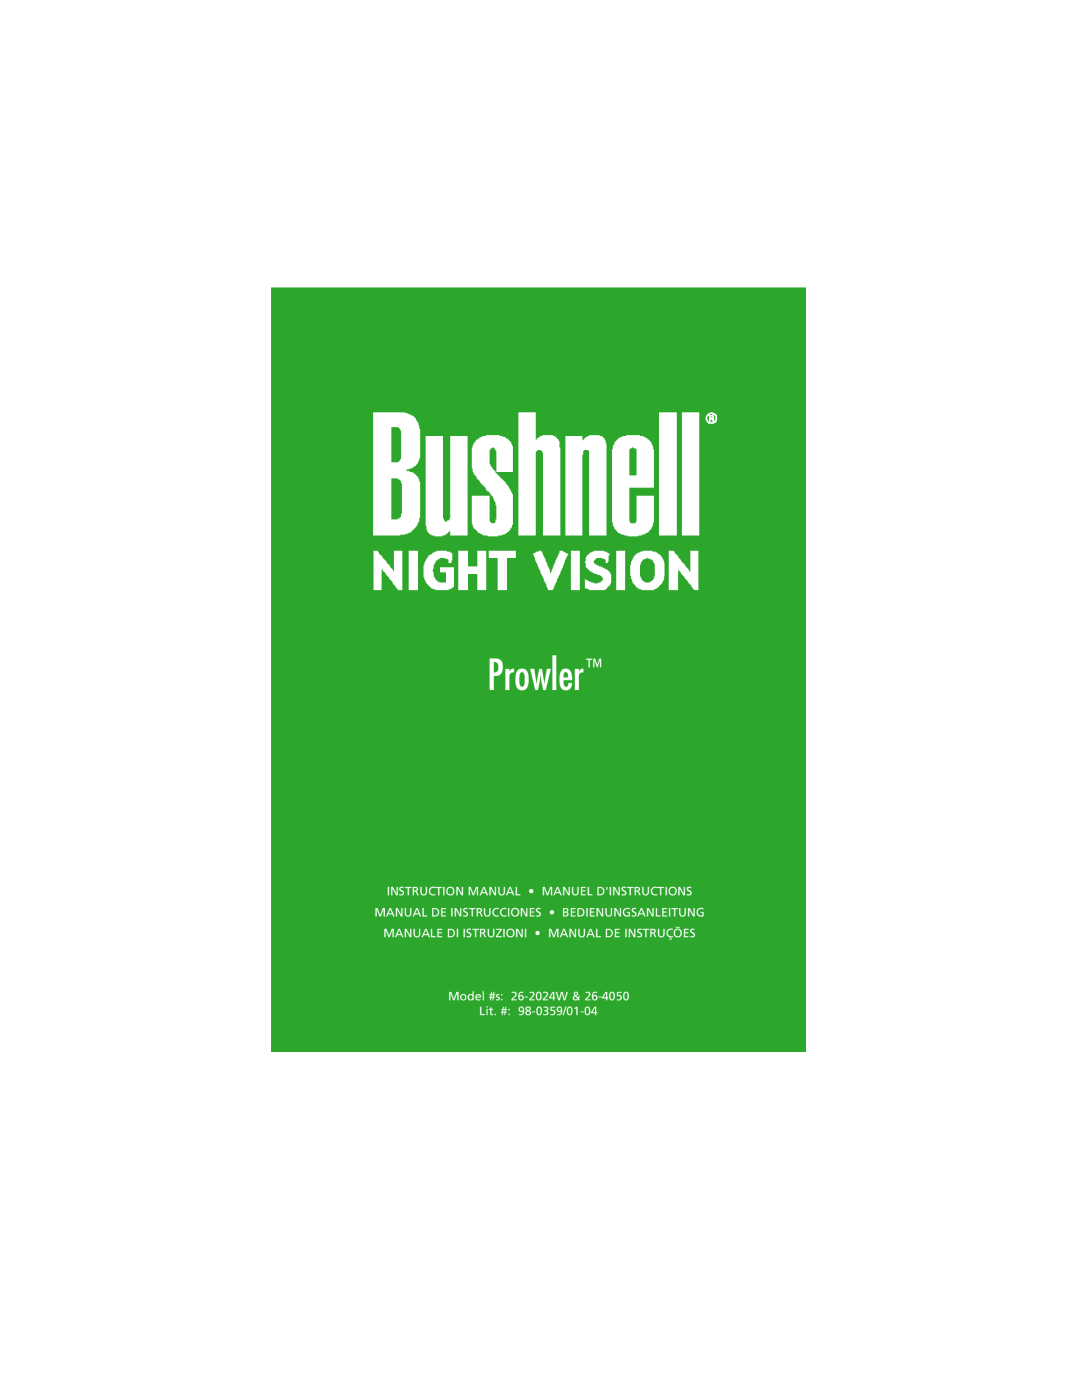 Bushnell 26-4050, 26-2024W instruction manual Prowler, Manual De Instrucciones Bedienungsanleitung 